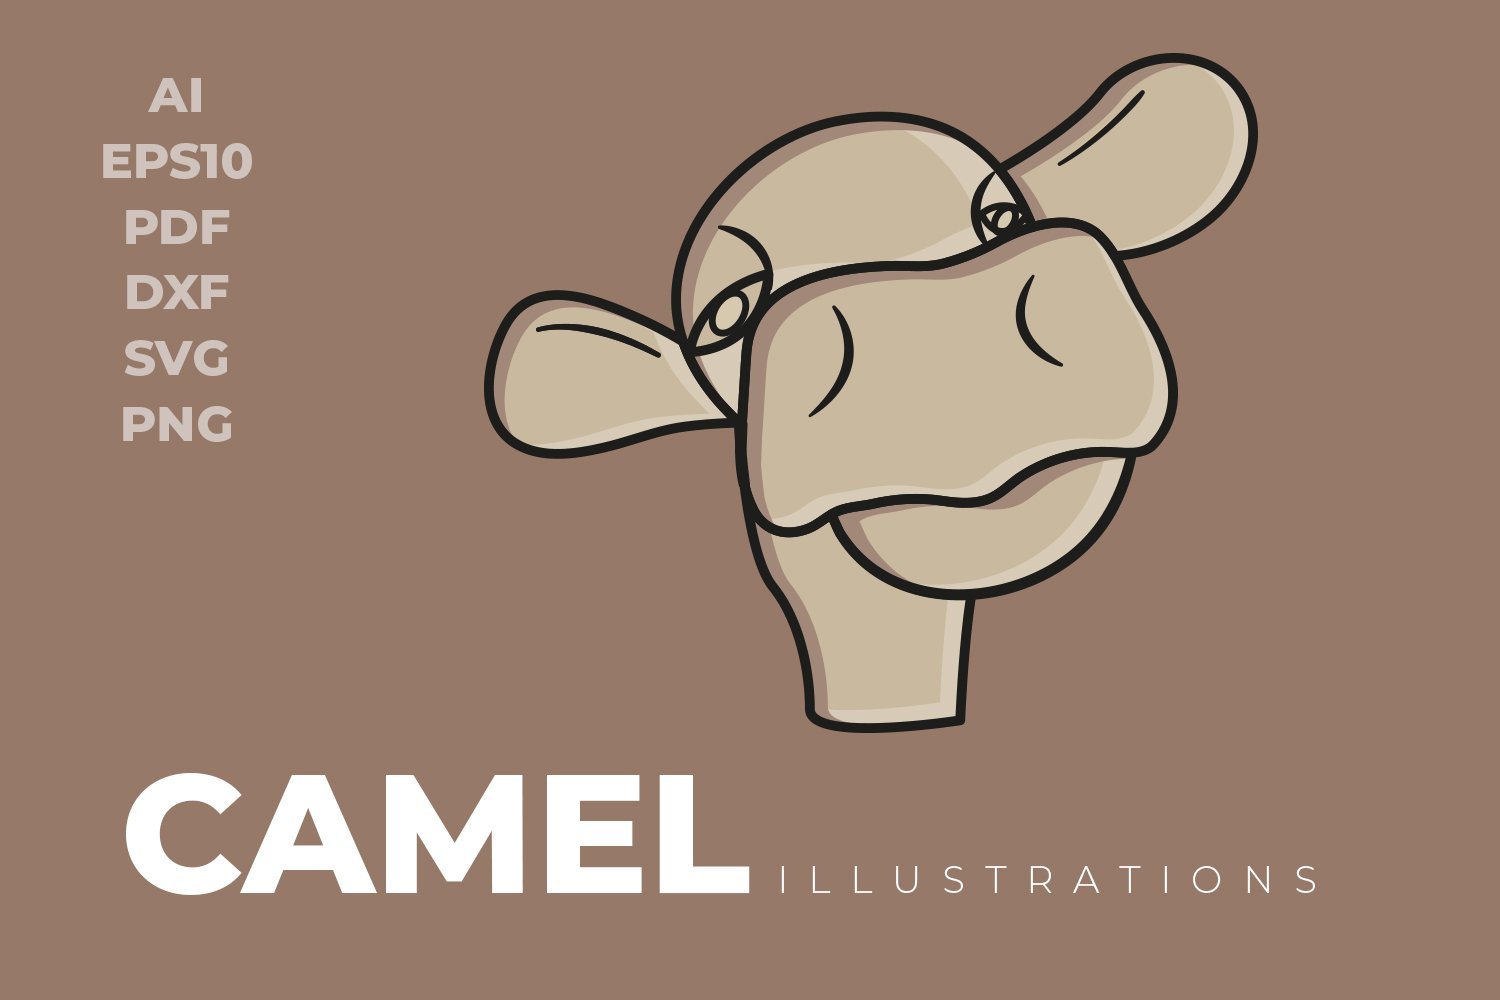 Illustration of Camel - Camel Vector cover image.